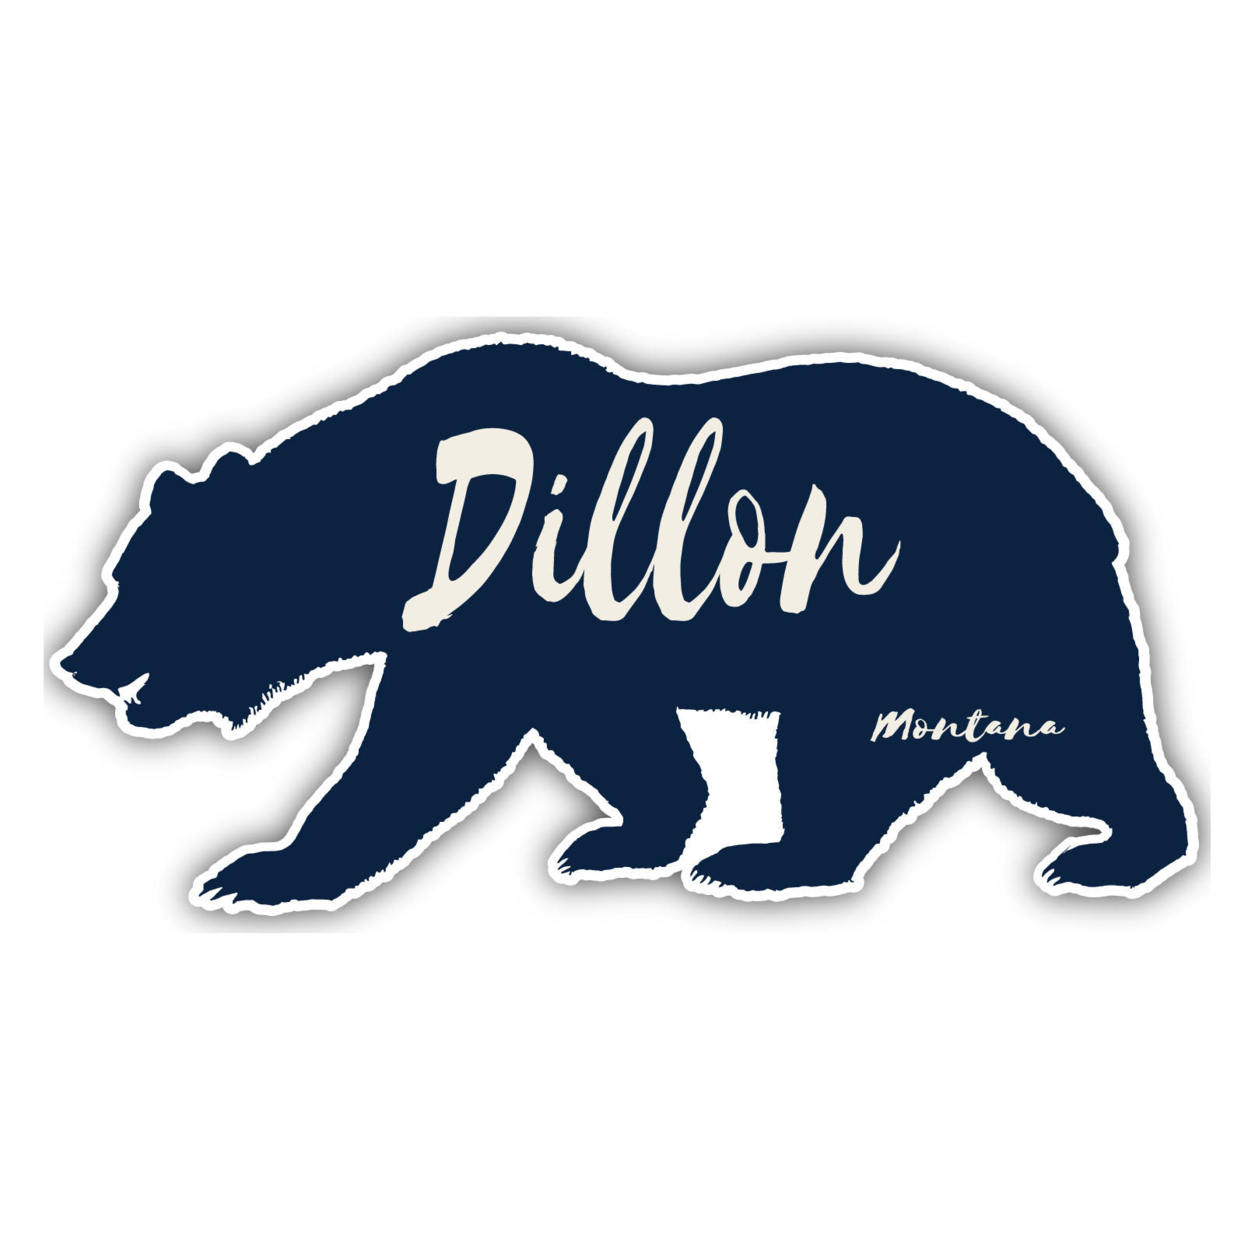 Dillon Montana Souvenir Decorative Stickers (Choose Theme And Size) - 4-Pack, 4-Inch, Tent